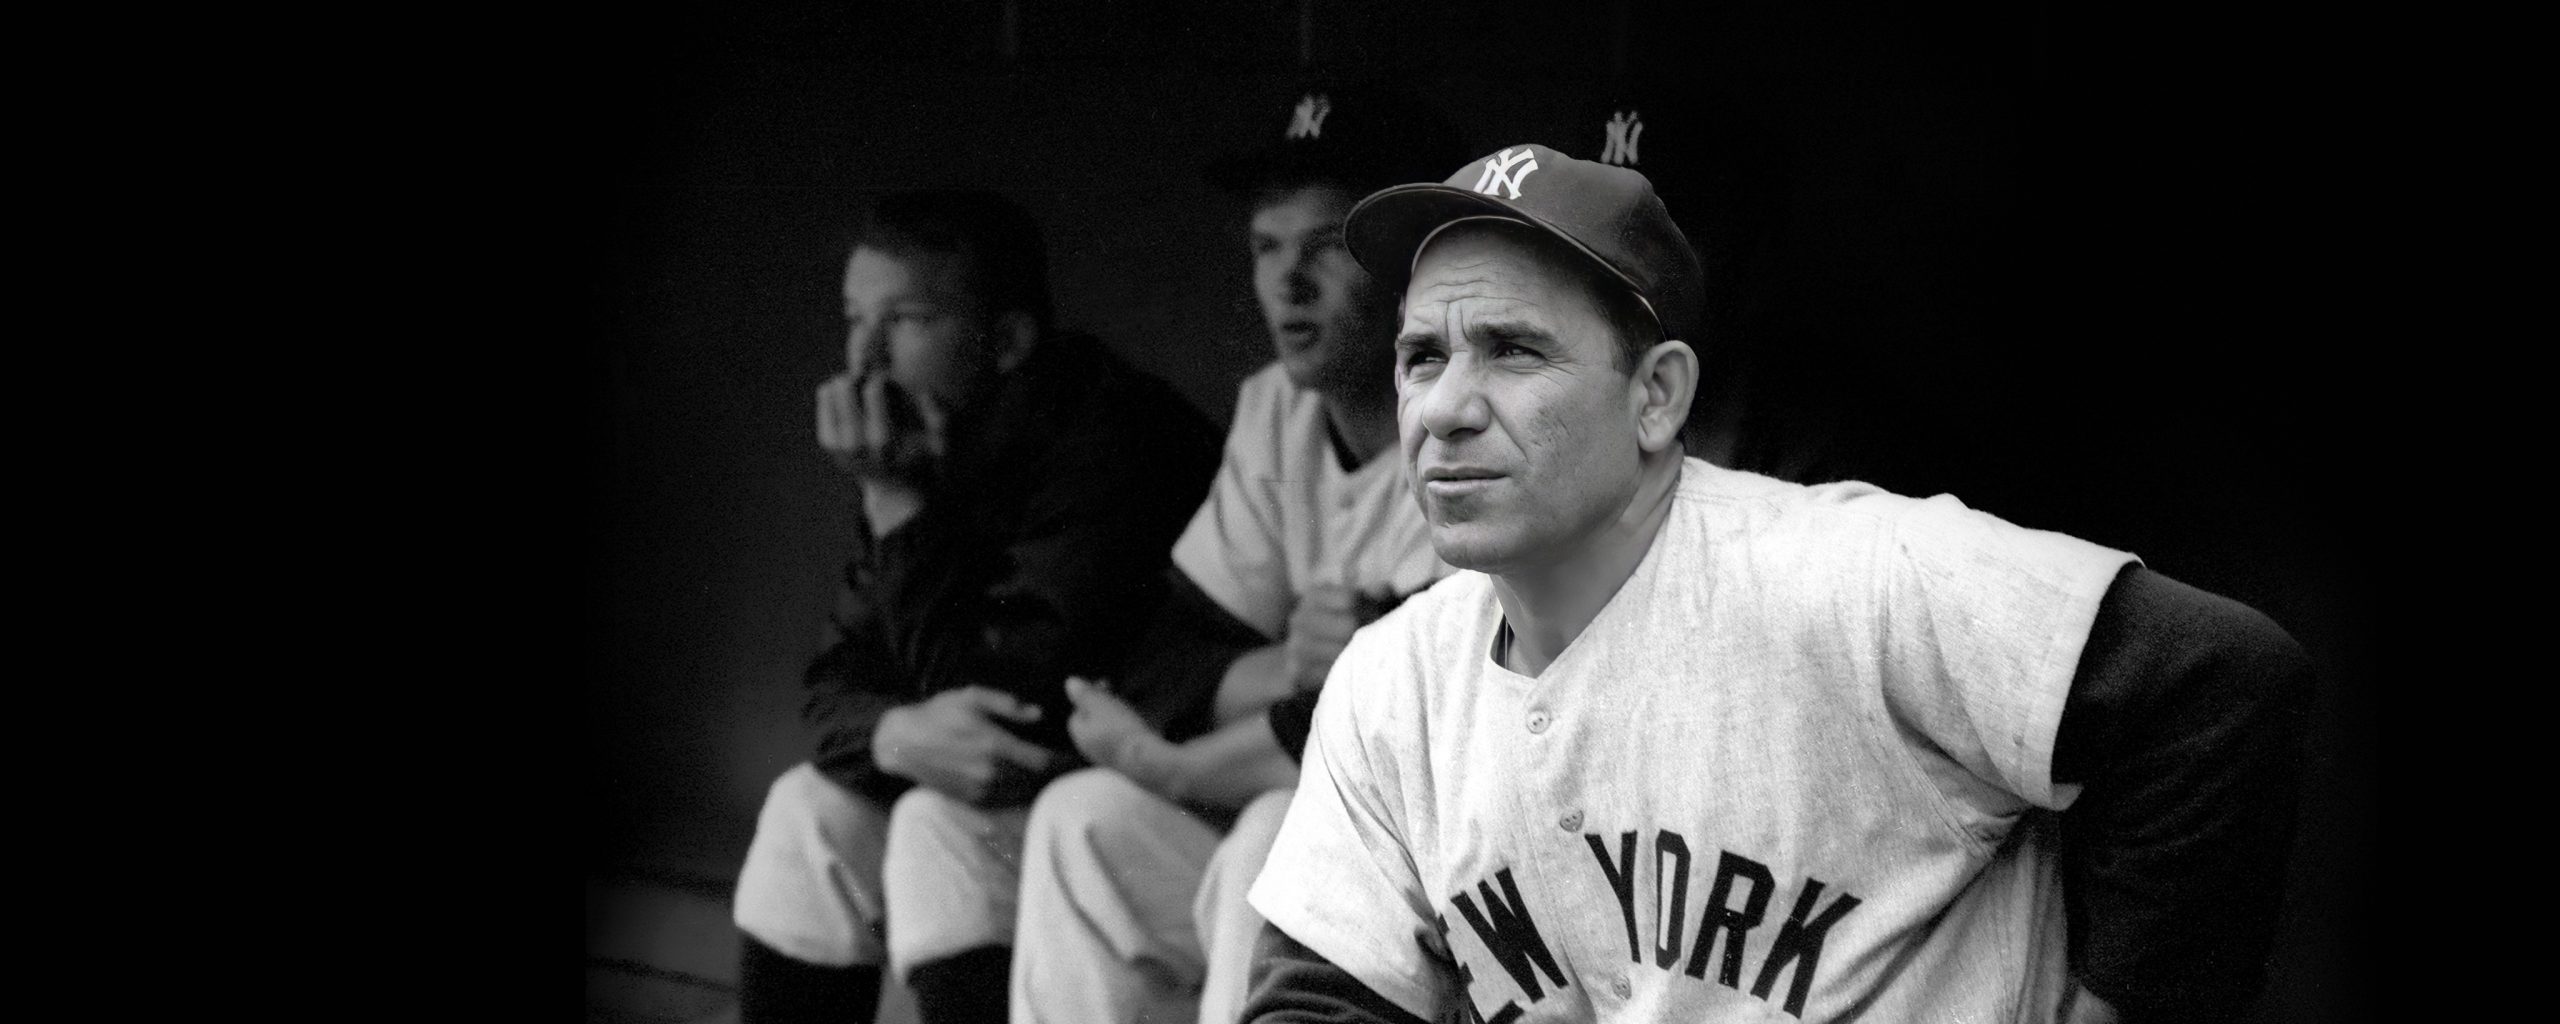 Yankees' Bats Make Burnett a Footnote - The New York Times